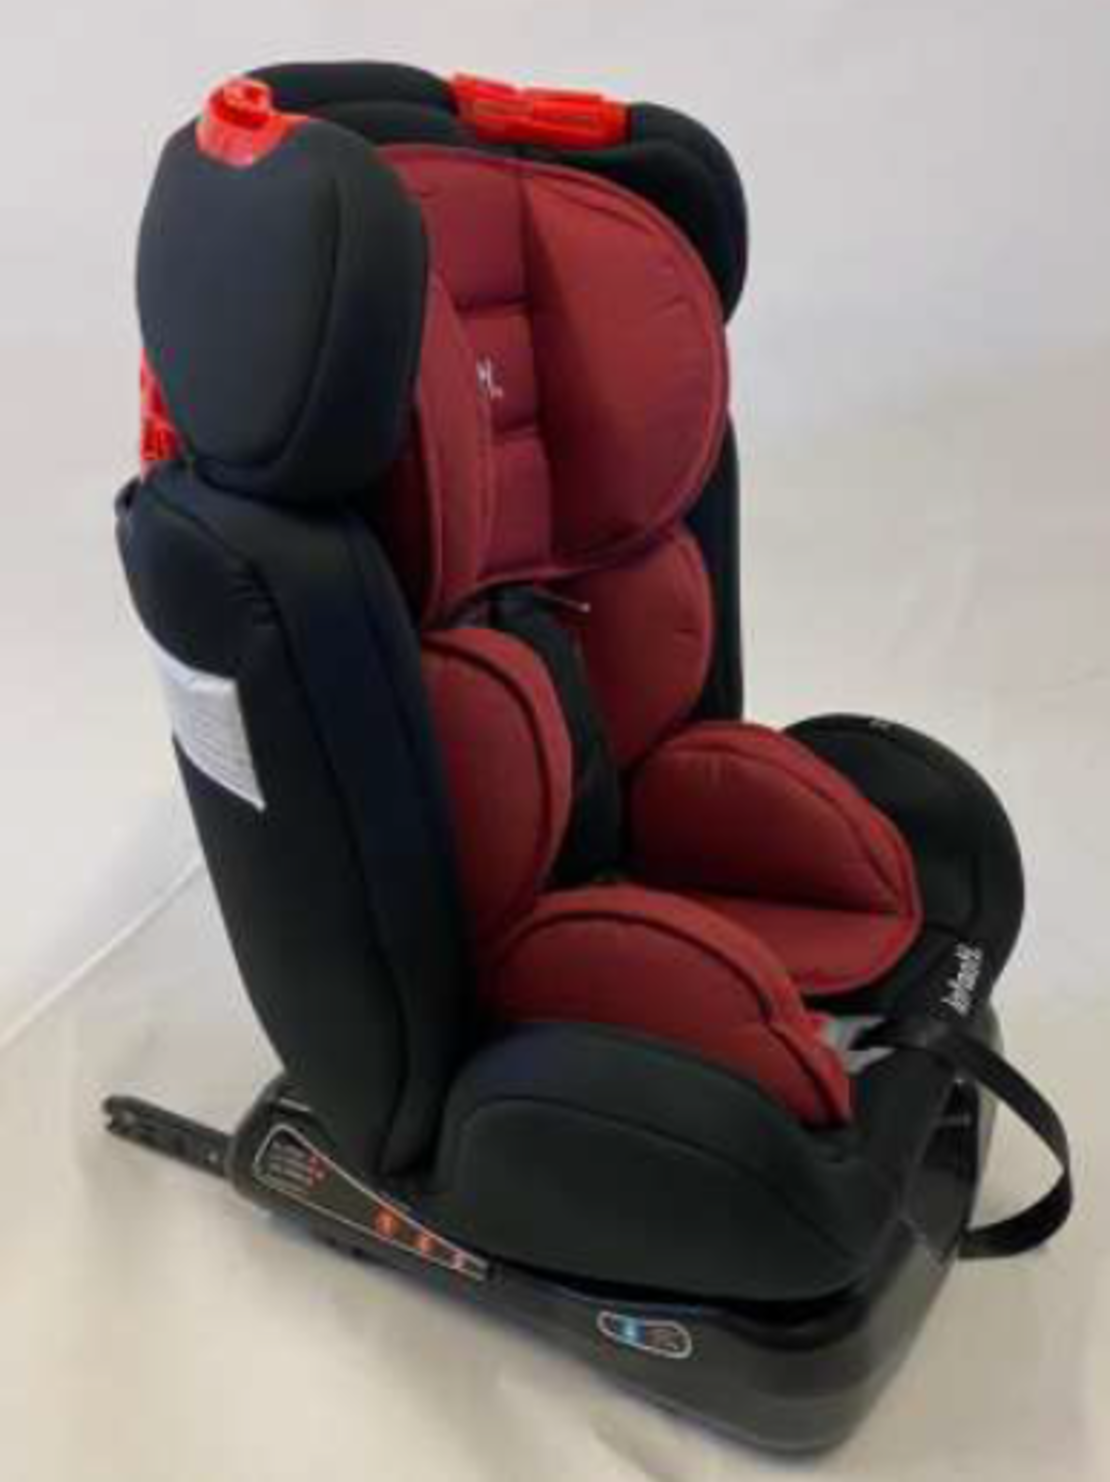 כיסא בטיחות אינפאנטי דגם SYMPHONY FIX עם איזופיקס